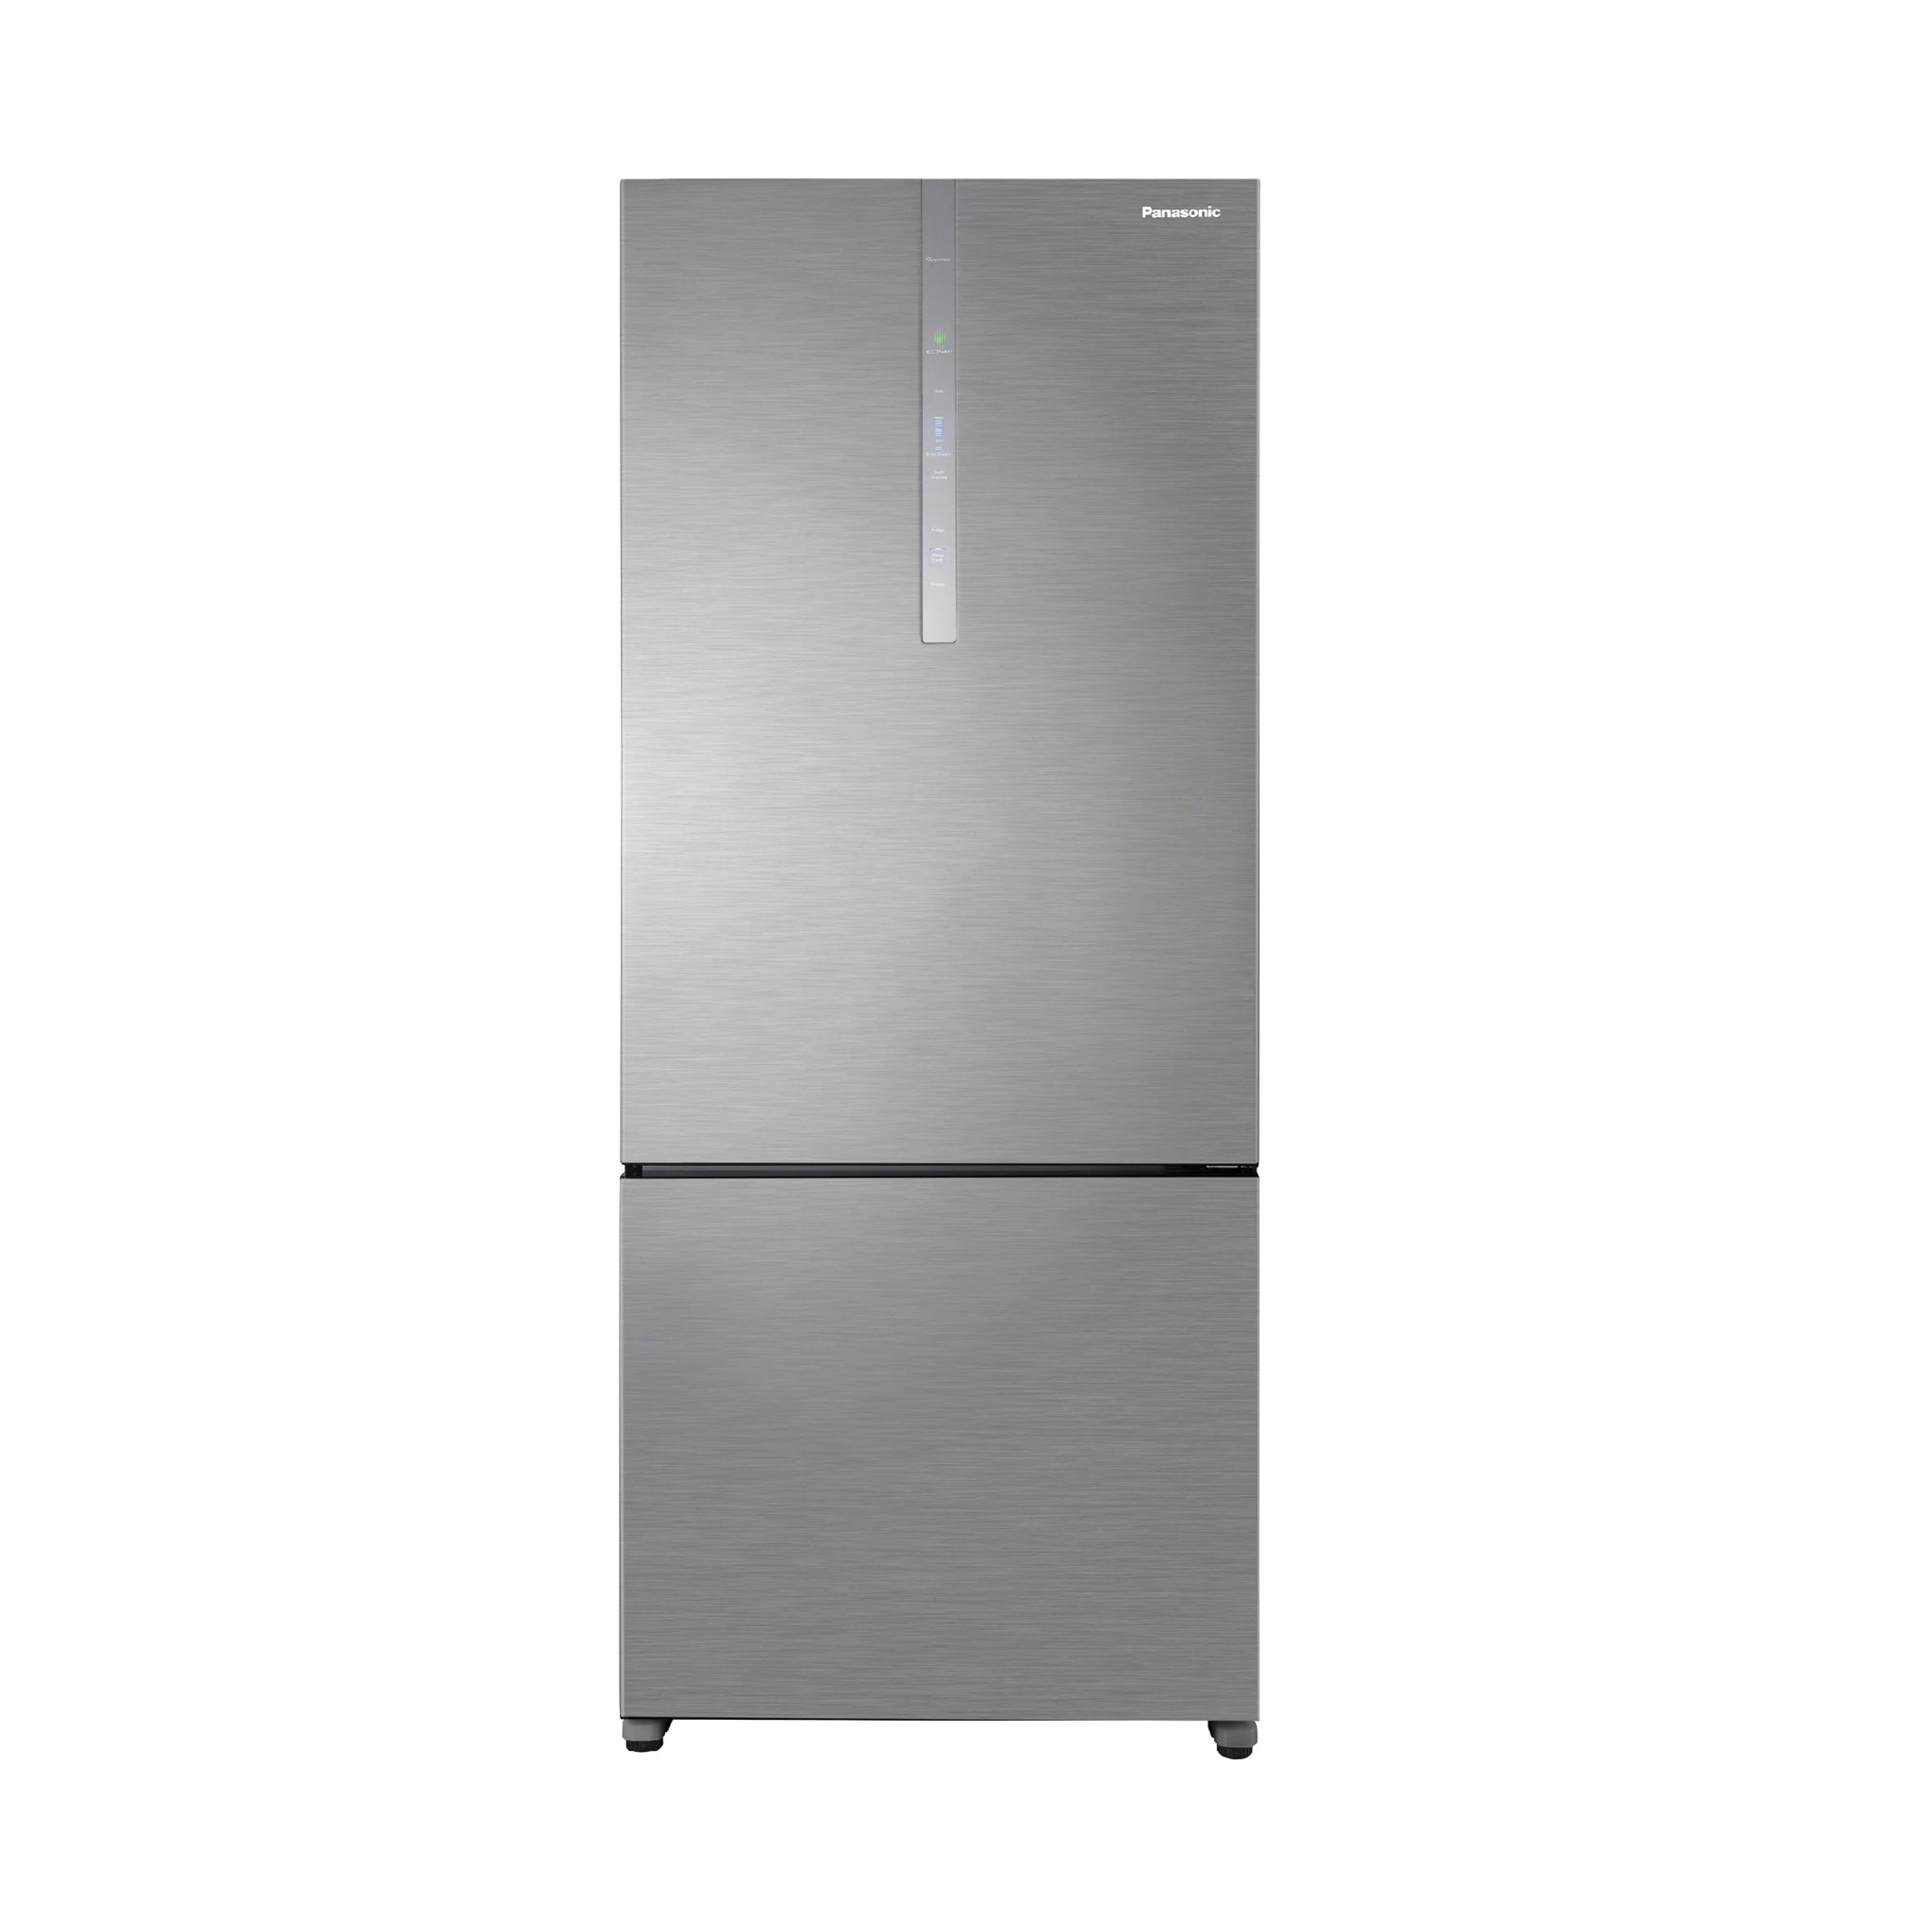 PANASONIC NR-BX471CPSPH 2-Door Bottom Freezer Refrigerator Panasonic